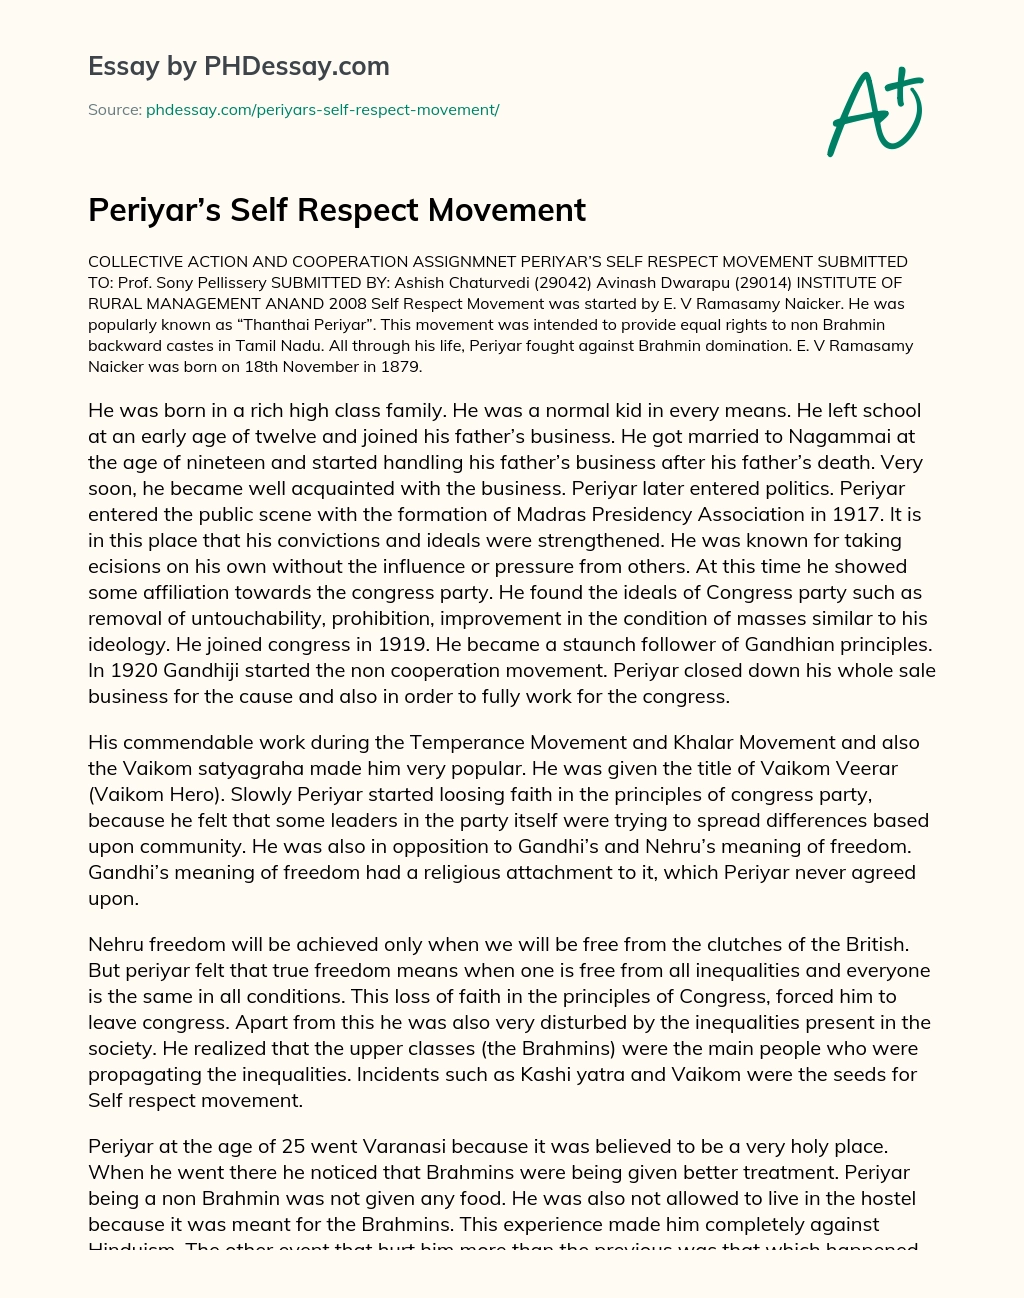 Periyar’s Self Respect Movement essay